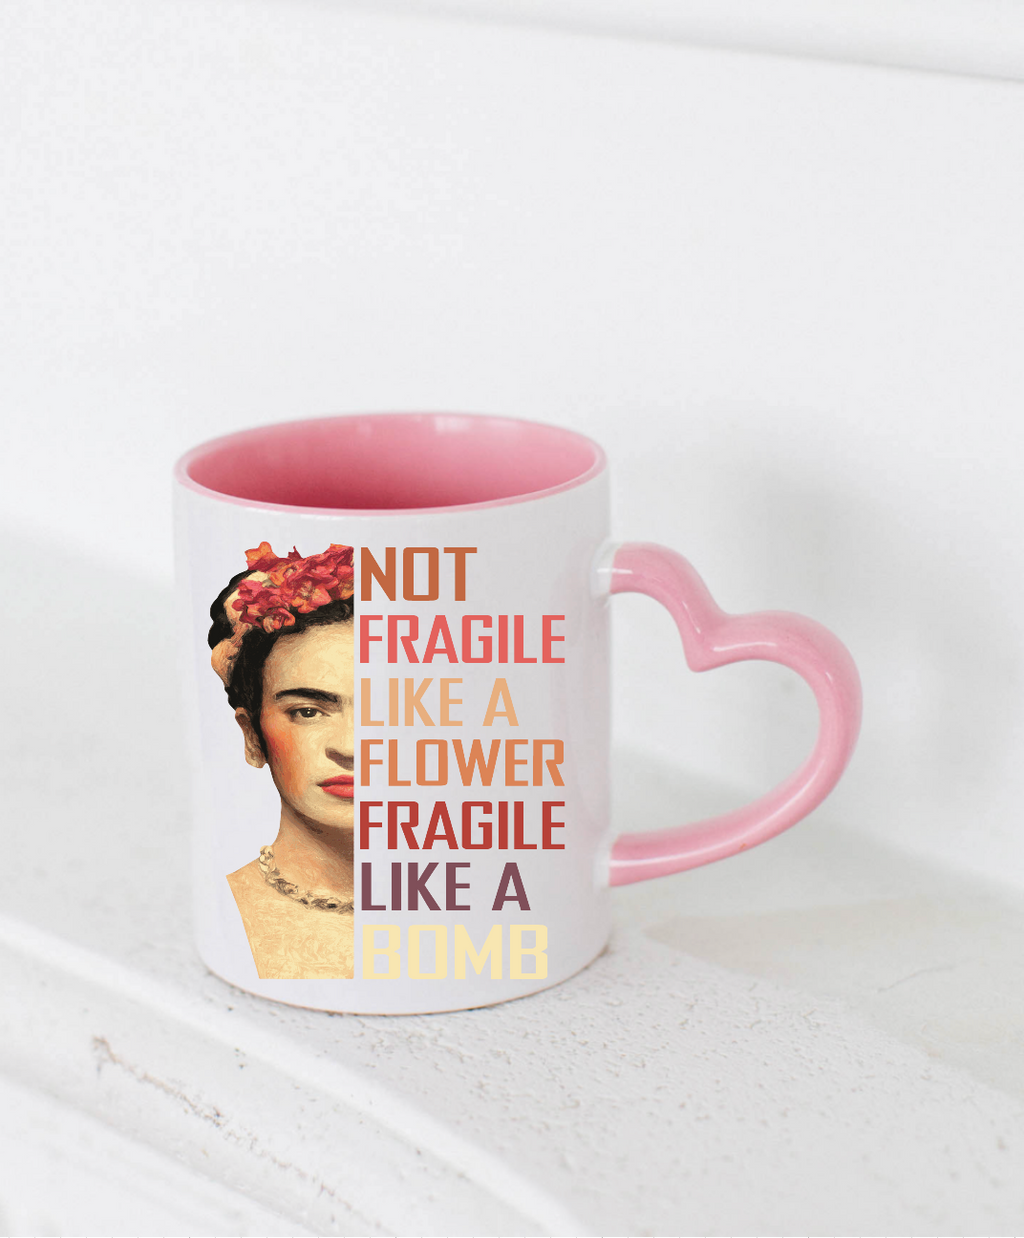 Fragile like a mug